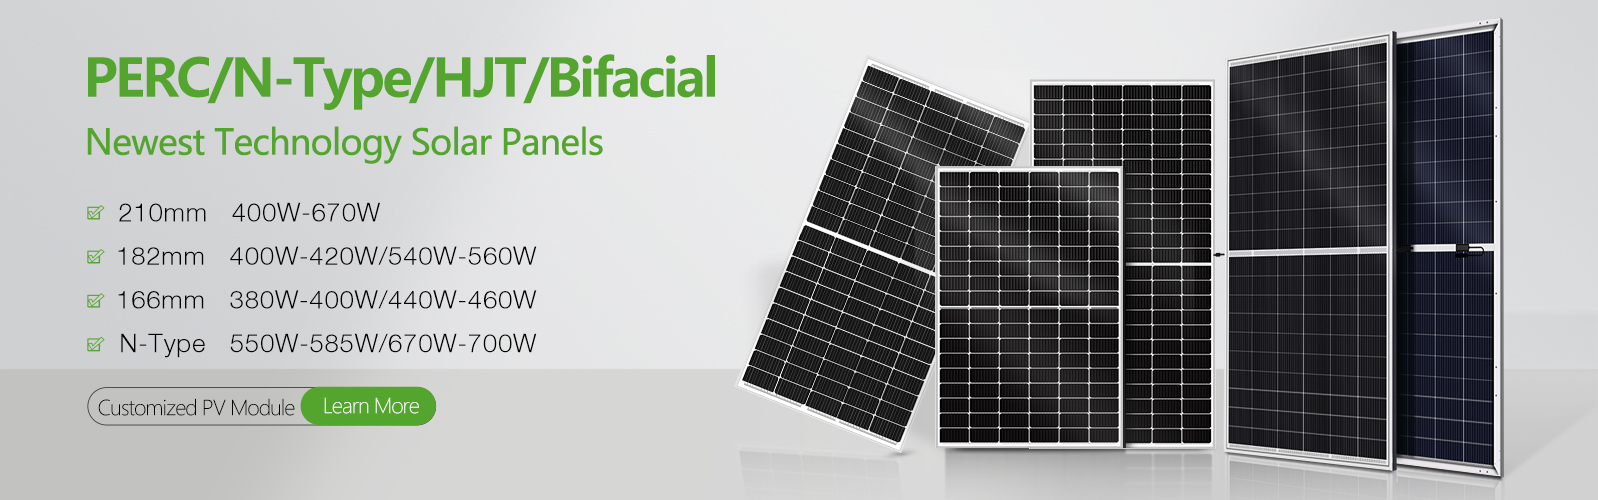 166mm 182mm 210mm Latest Technology Solar Panels